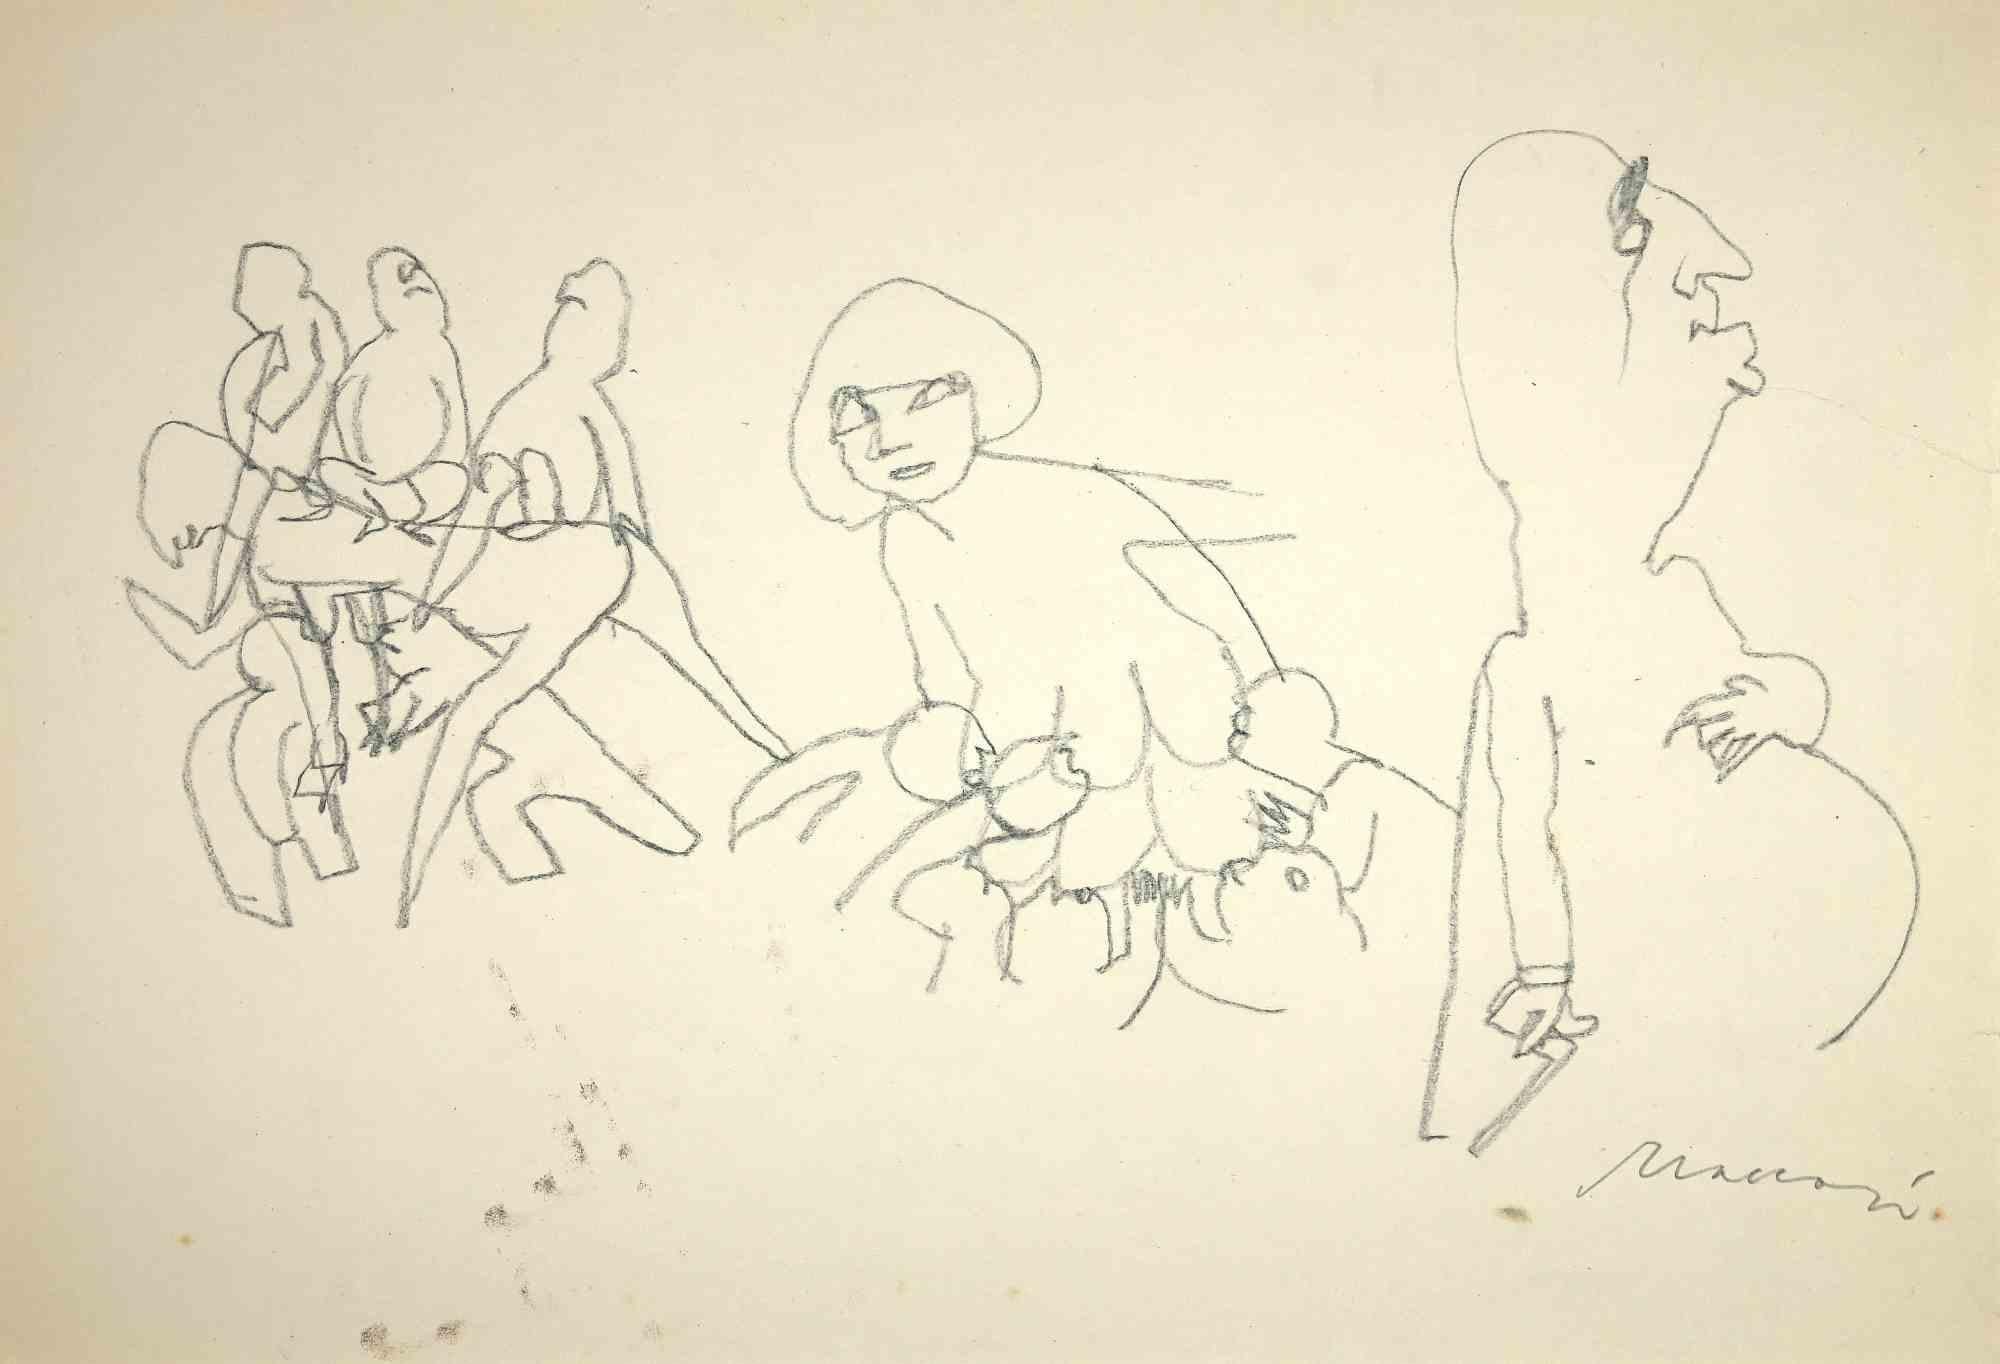 The Motherhood - Drawing by Mino Maccari - Mid-20th Century